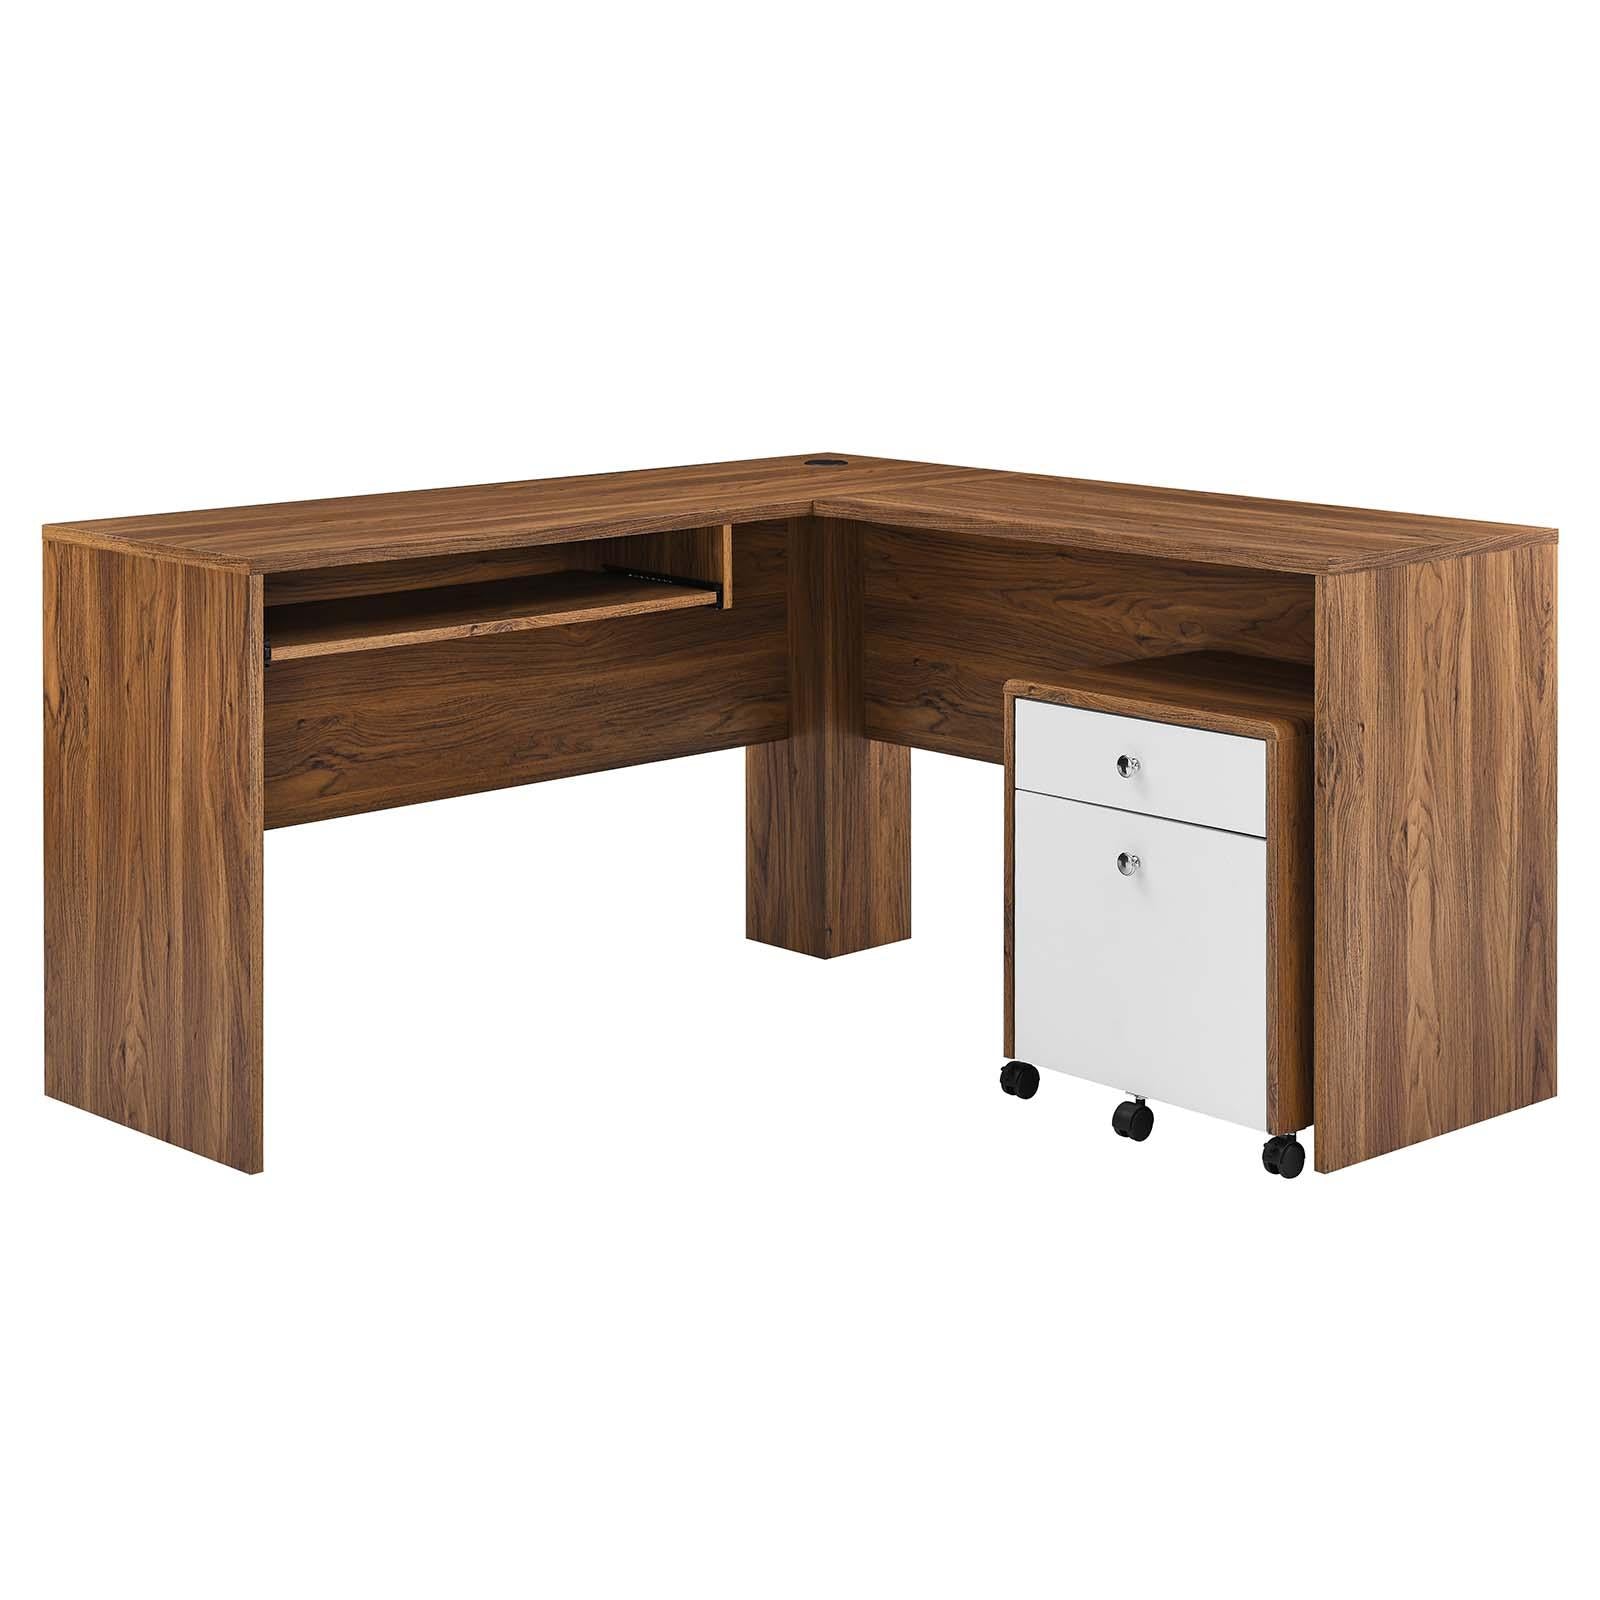 Modway Furniture Modern Transmit Wood Desk and File Cabinet Set - EEI-5822